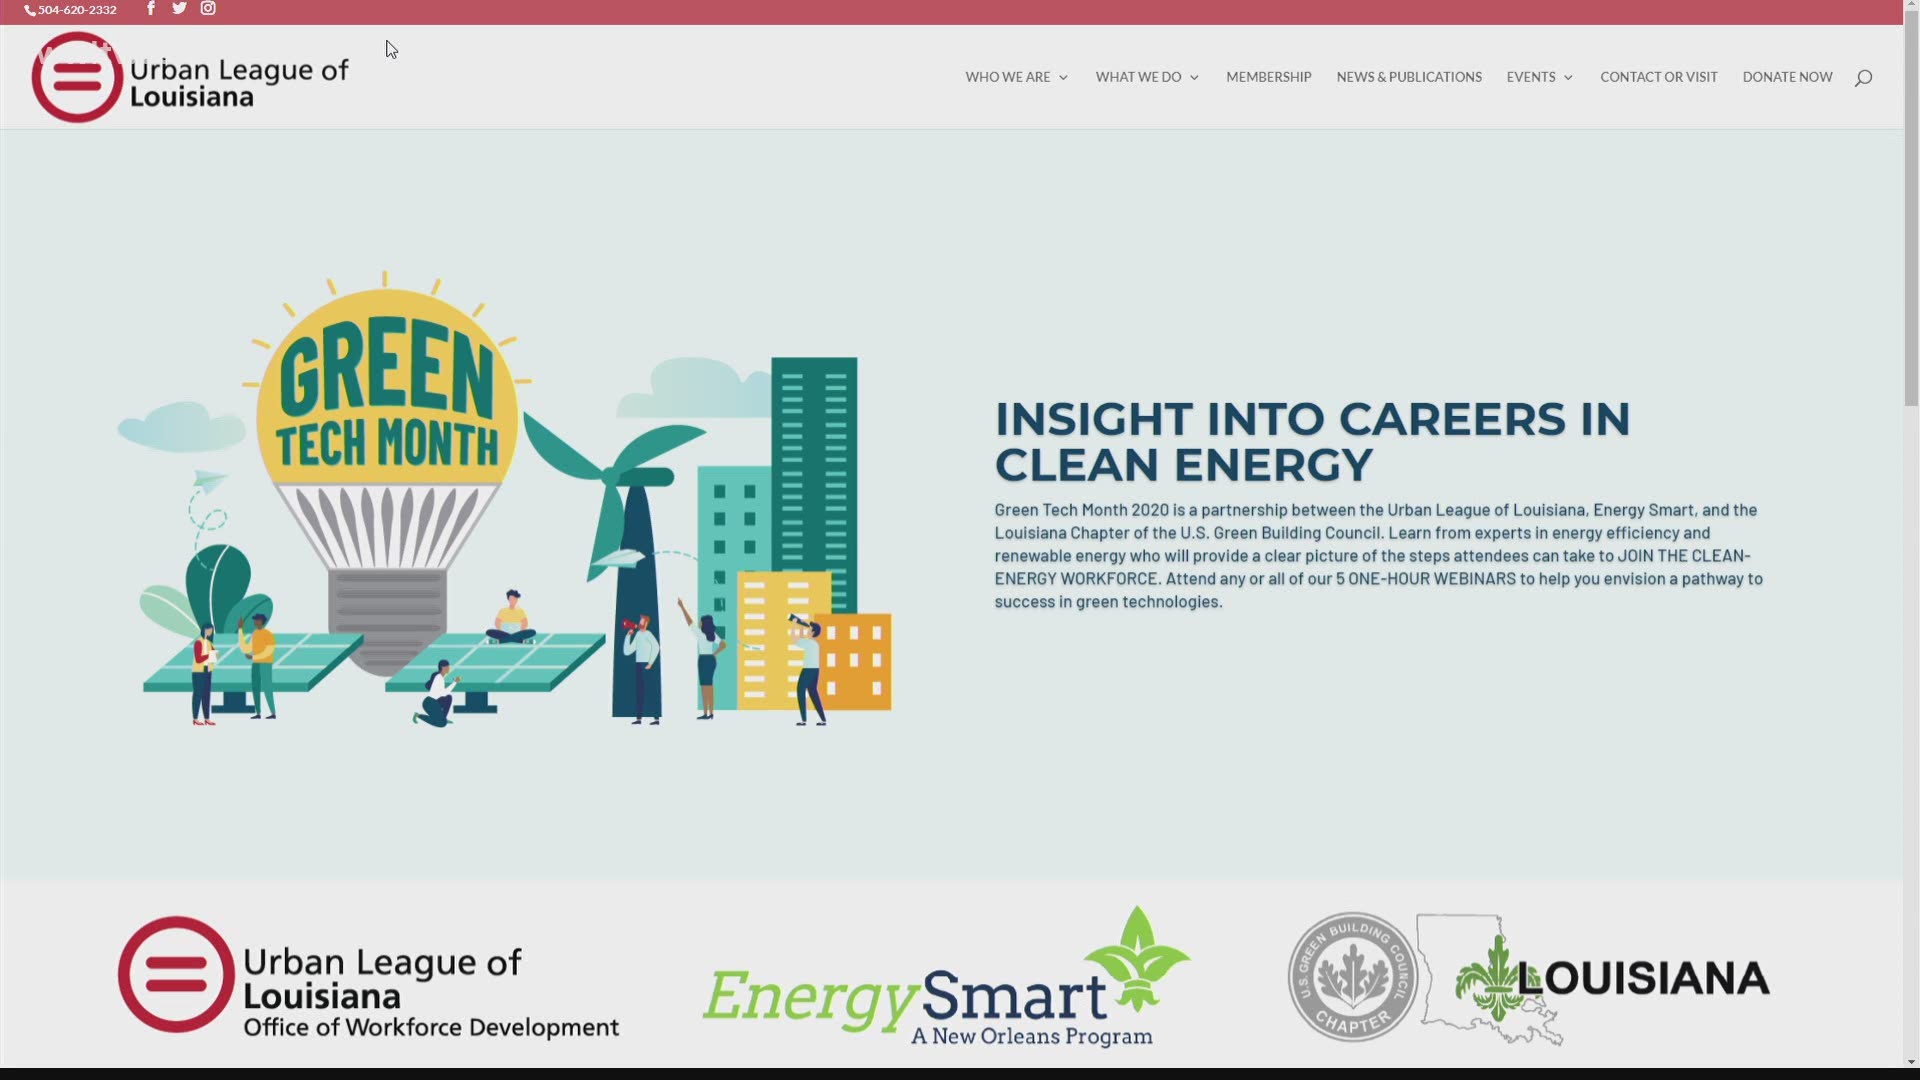 For more information on Green Tech Month 2020 webinars, visit: https://urbanleaguela.org/green-tech-2020/